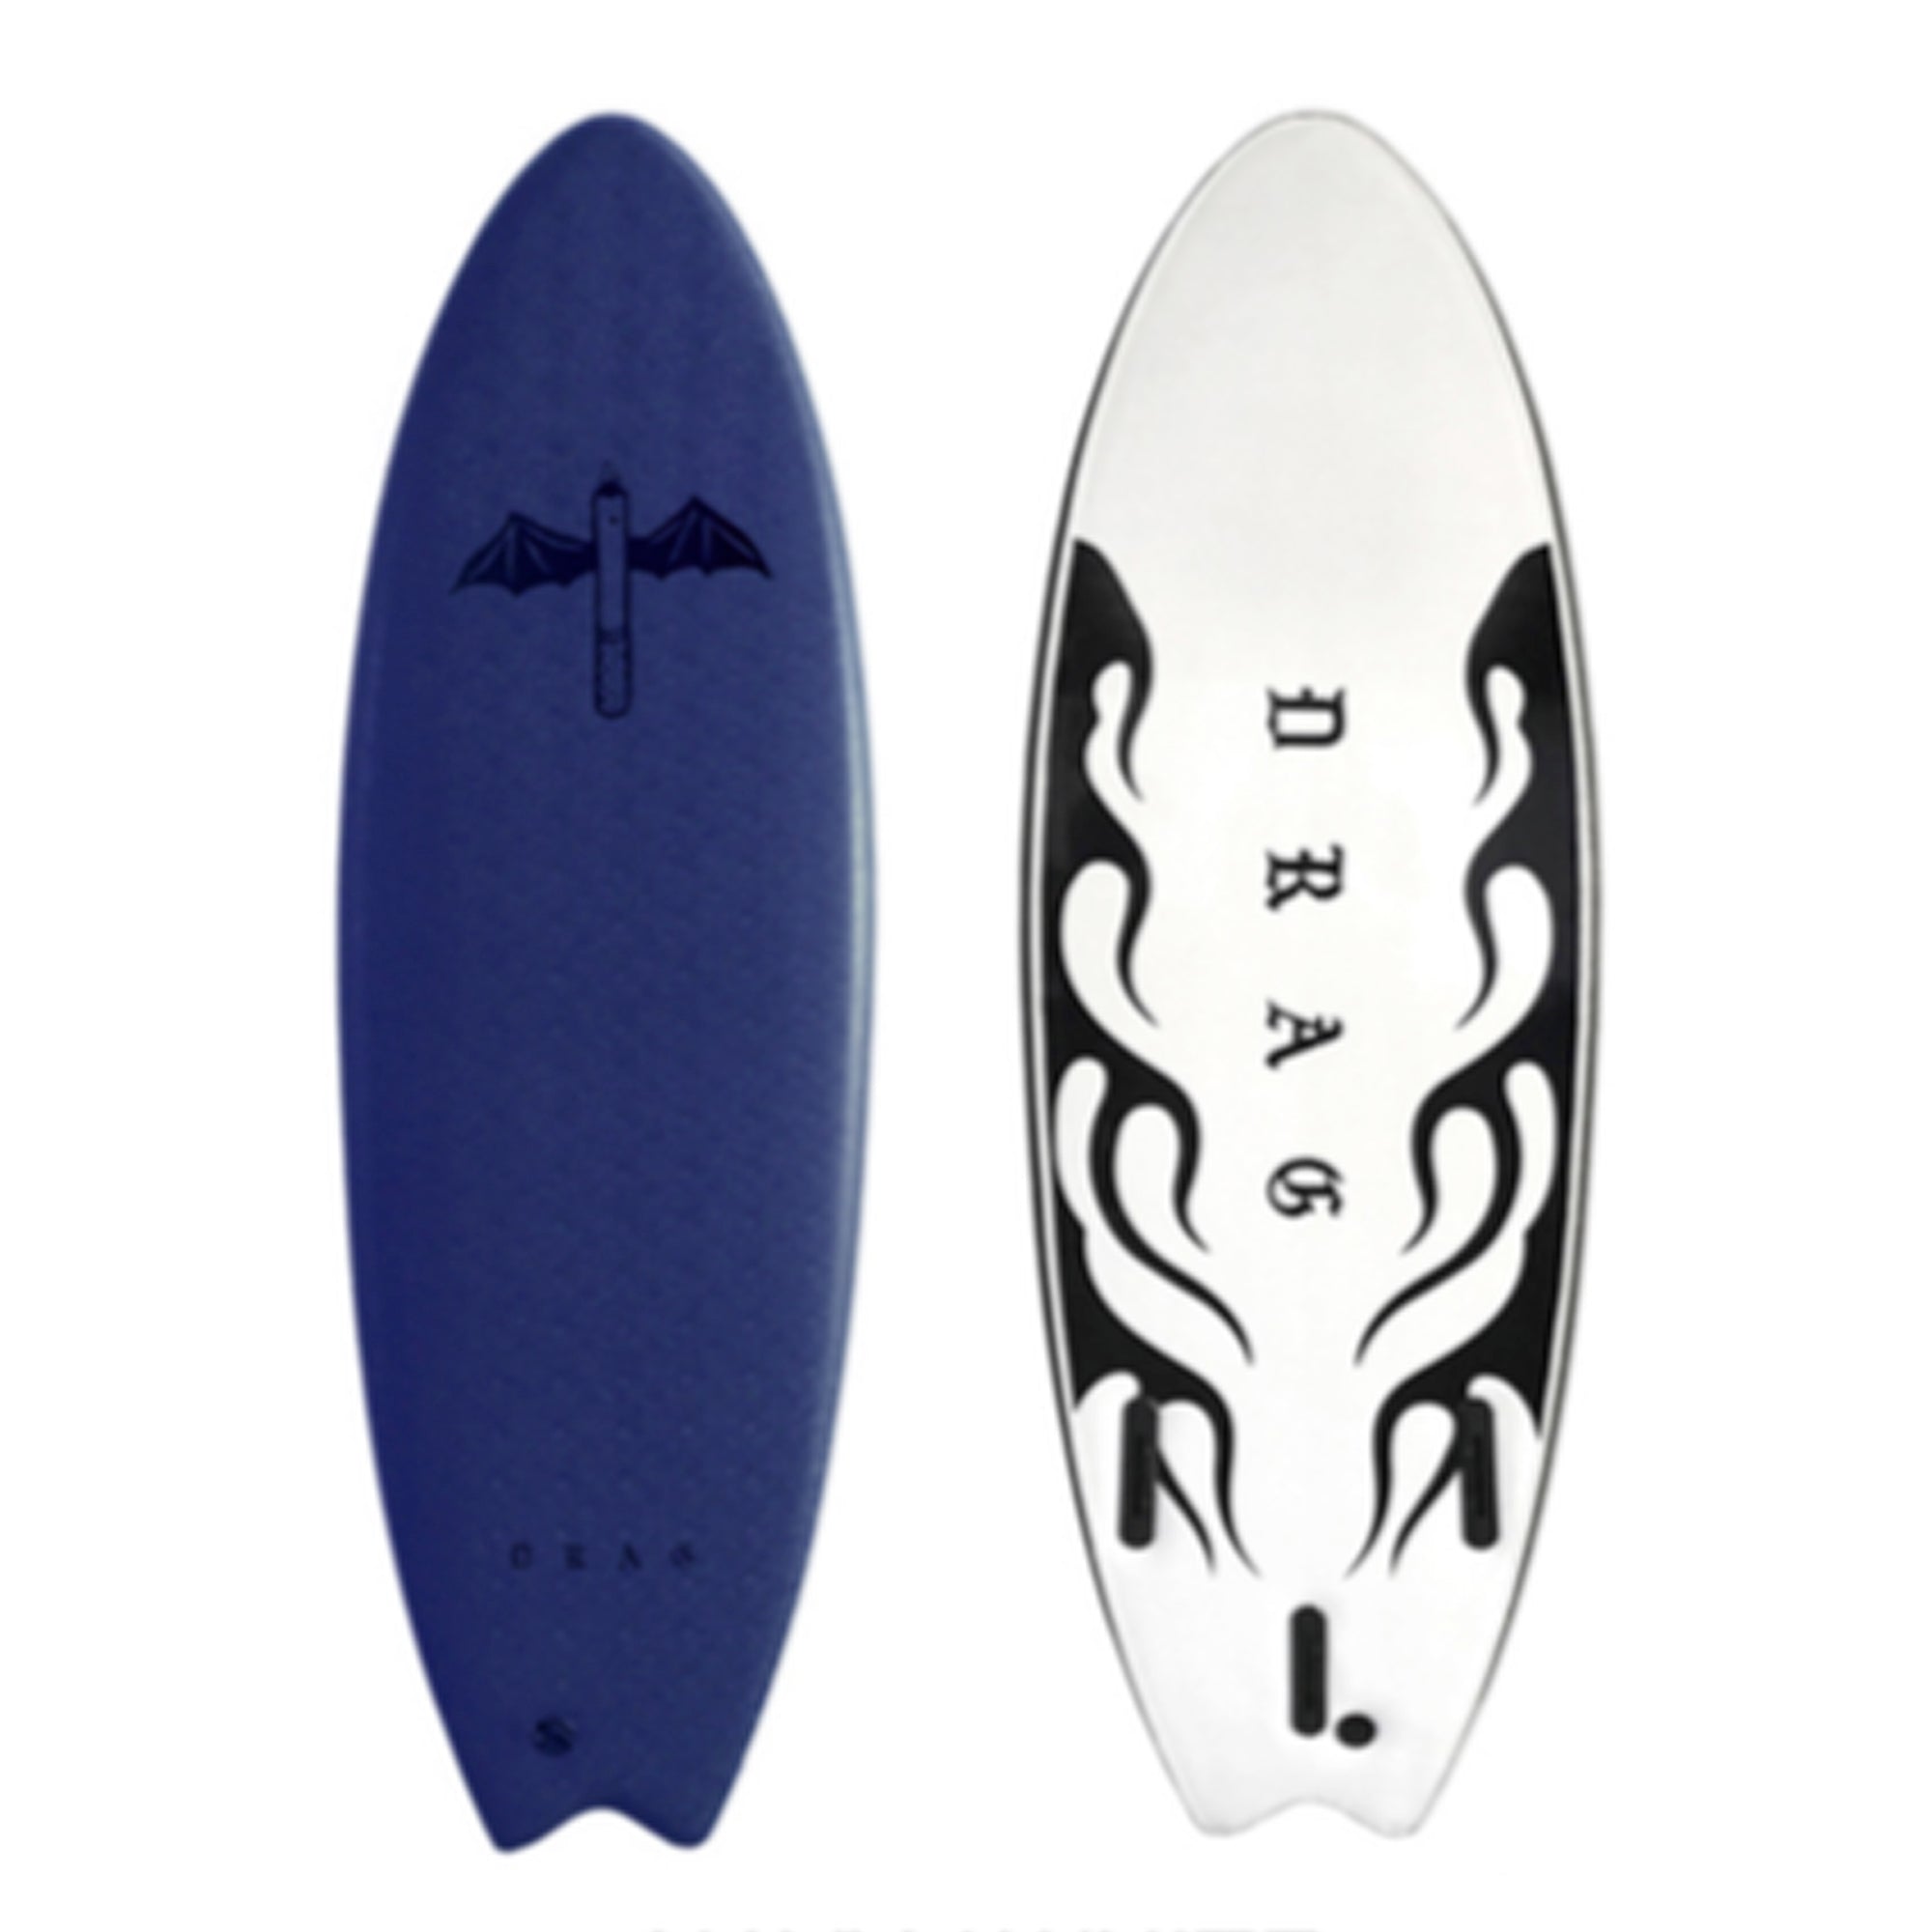 Drag Dart 5'6 Thruster Soft Surfboard - Surf Station Store